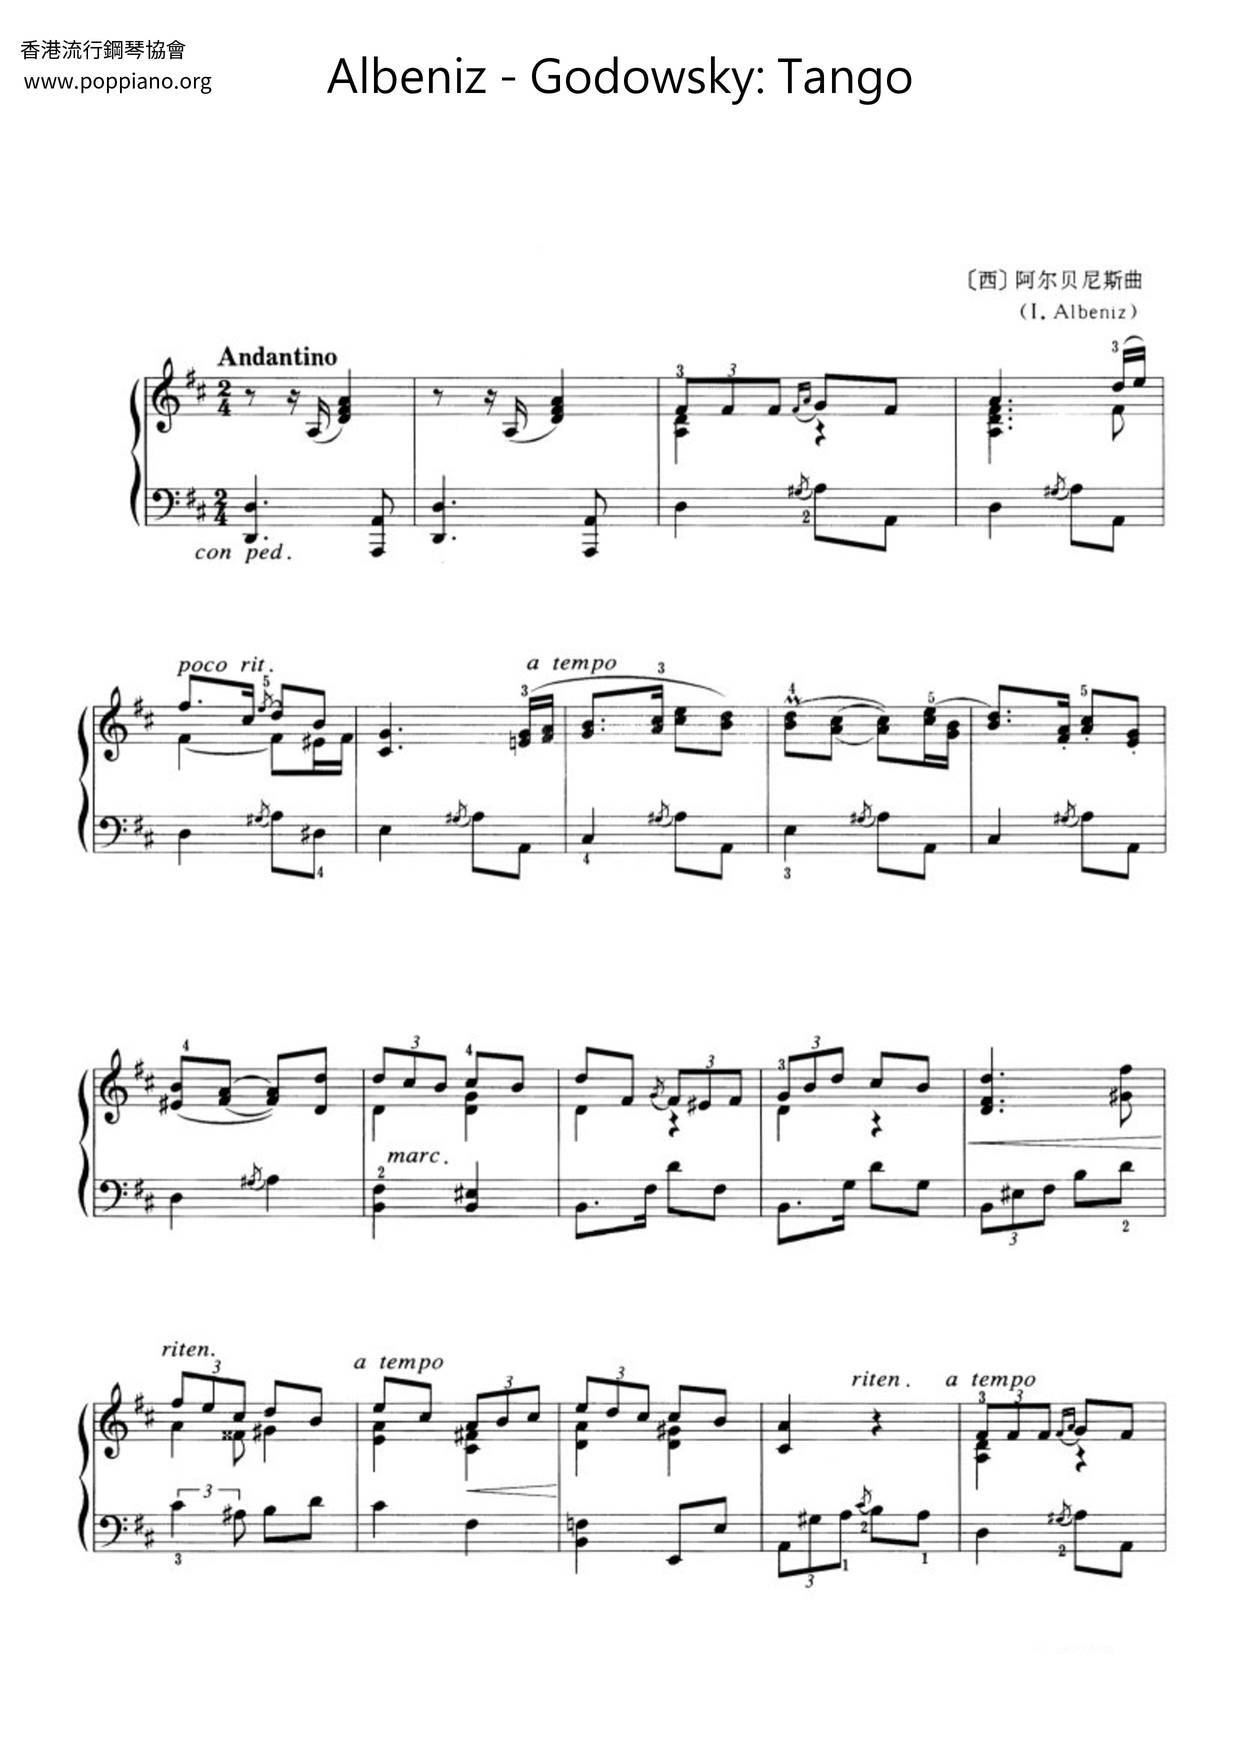 Godowsky: Tango Score